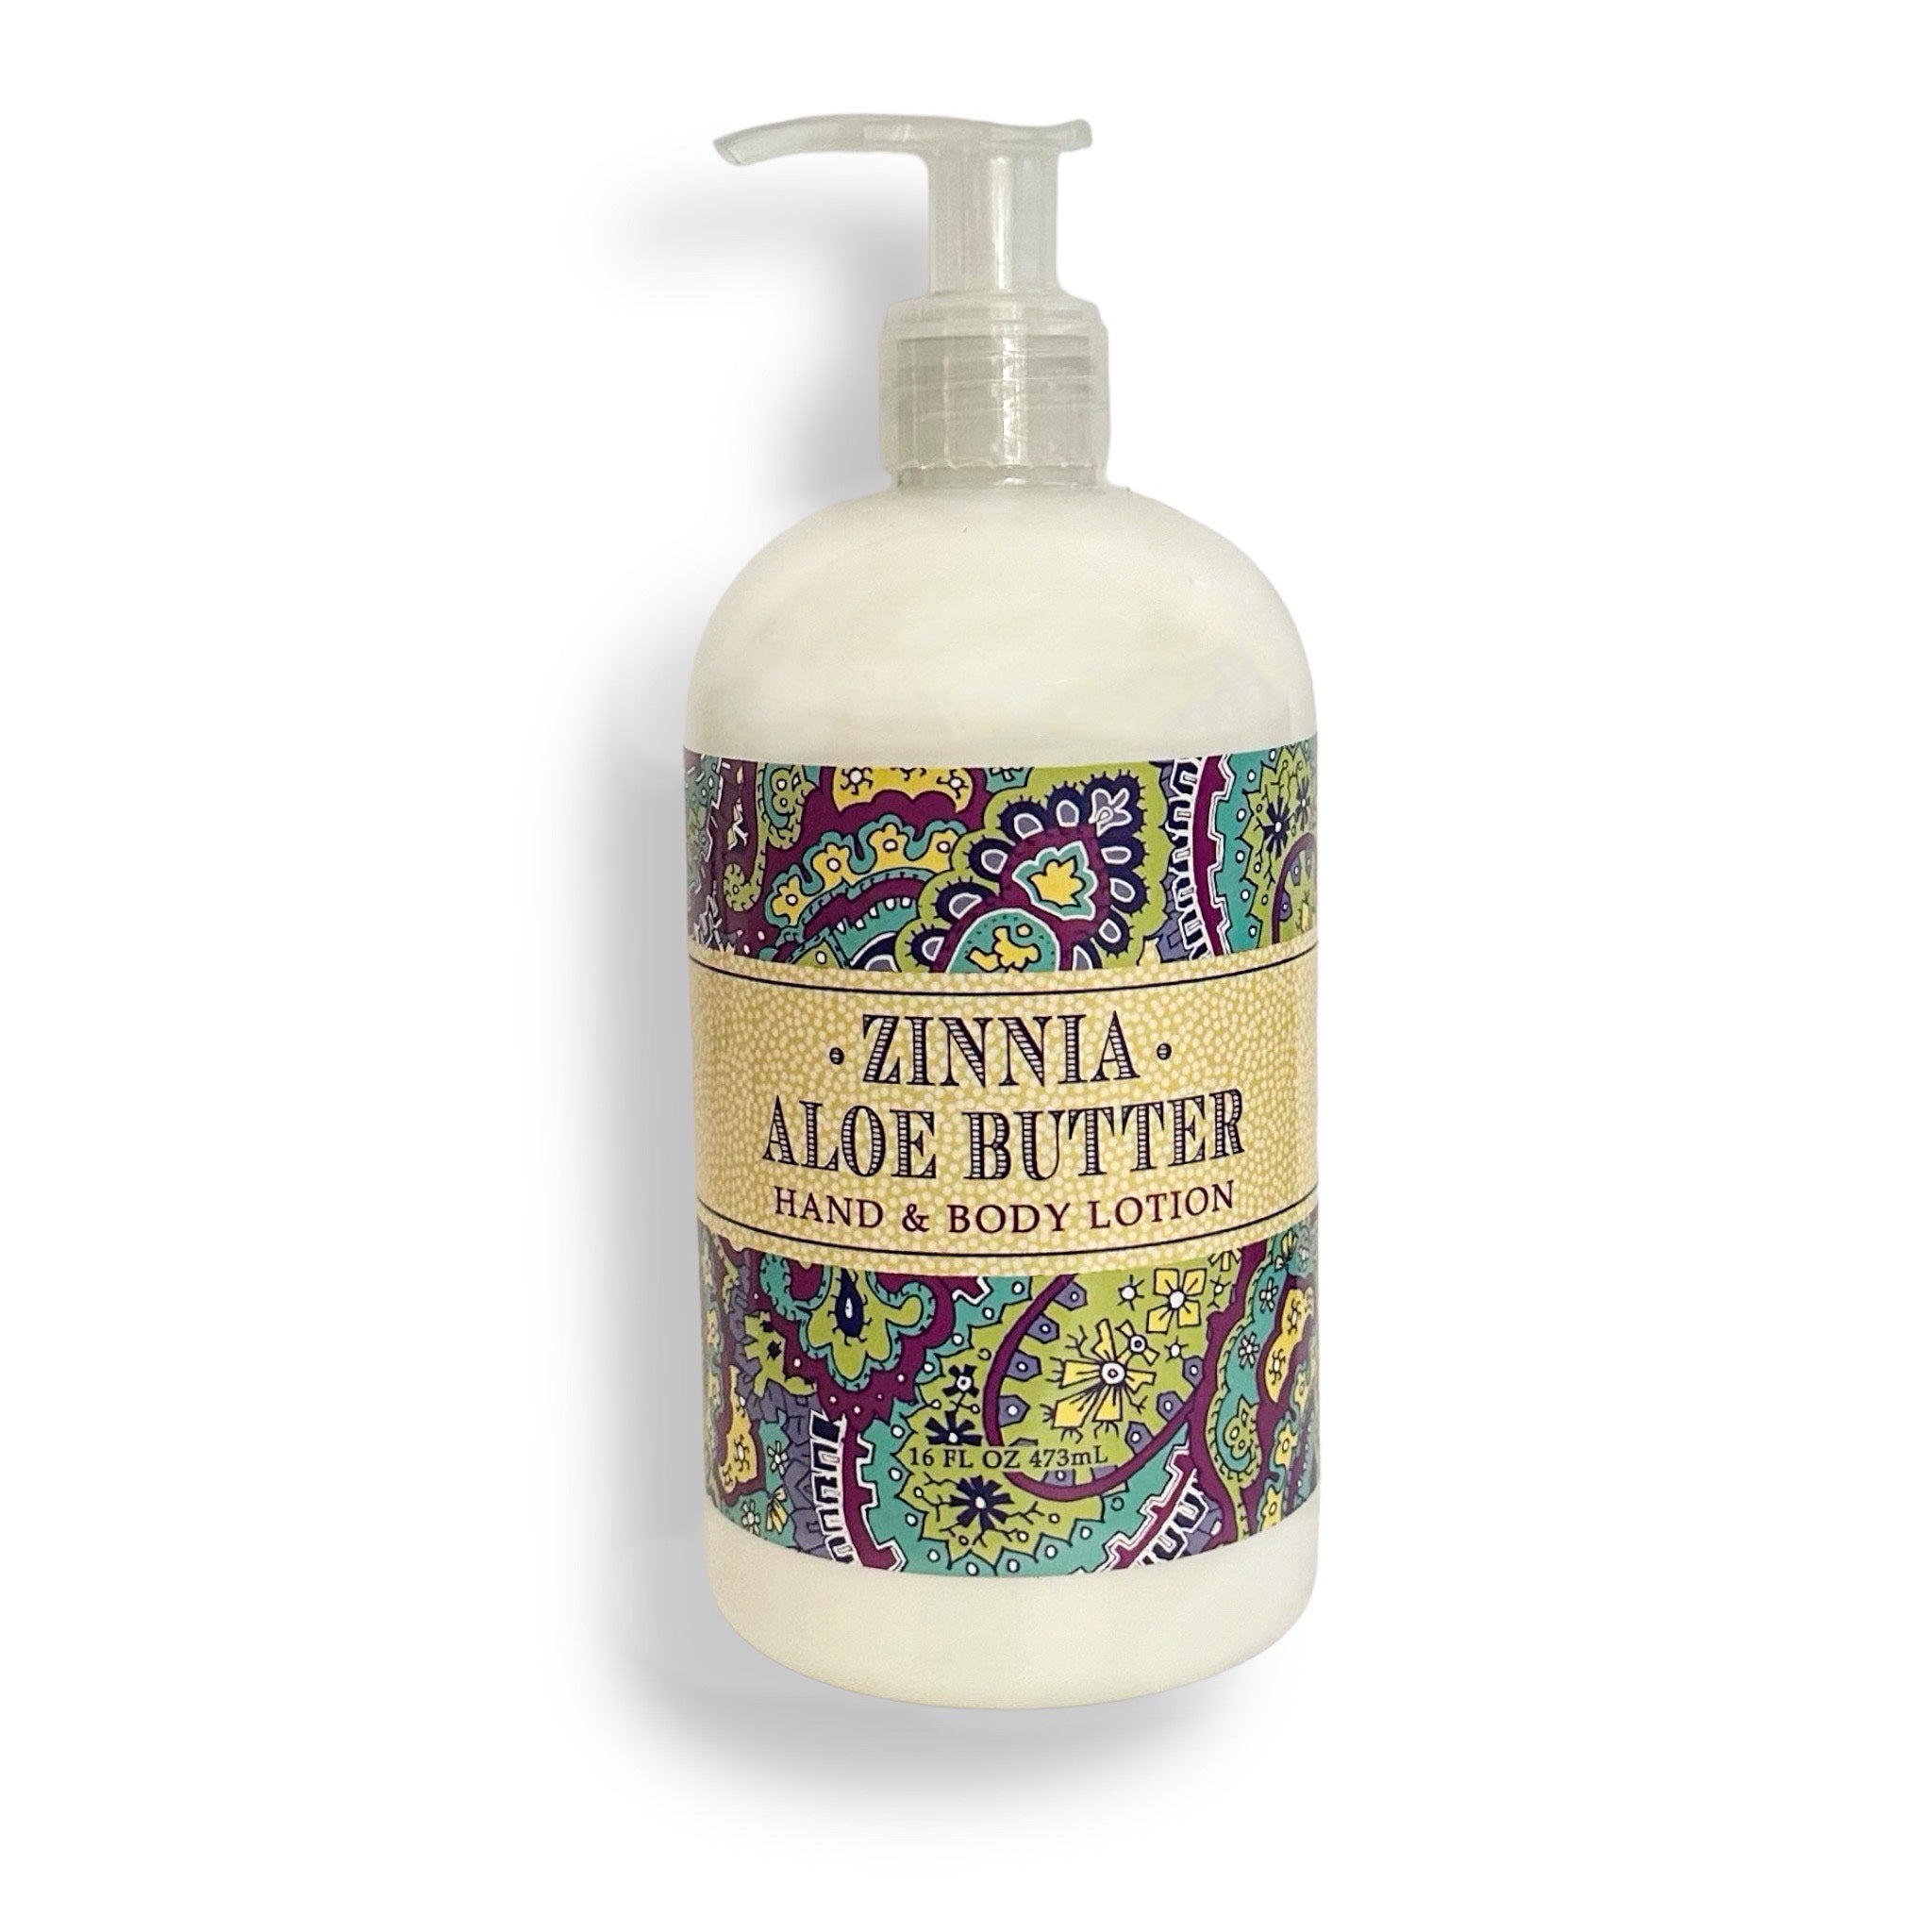 Zinnia Aloe Butter Hand and Body Lotion - Greenwich Bay Trading Company 